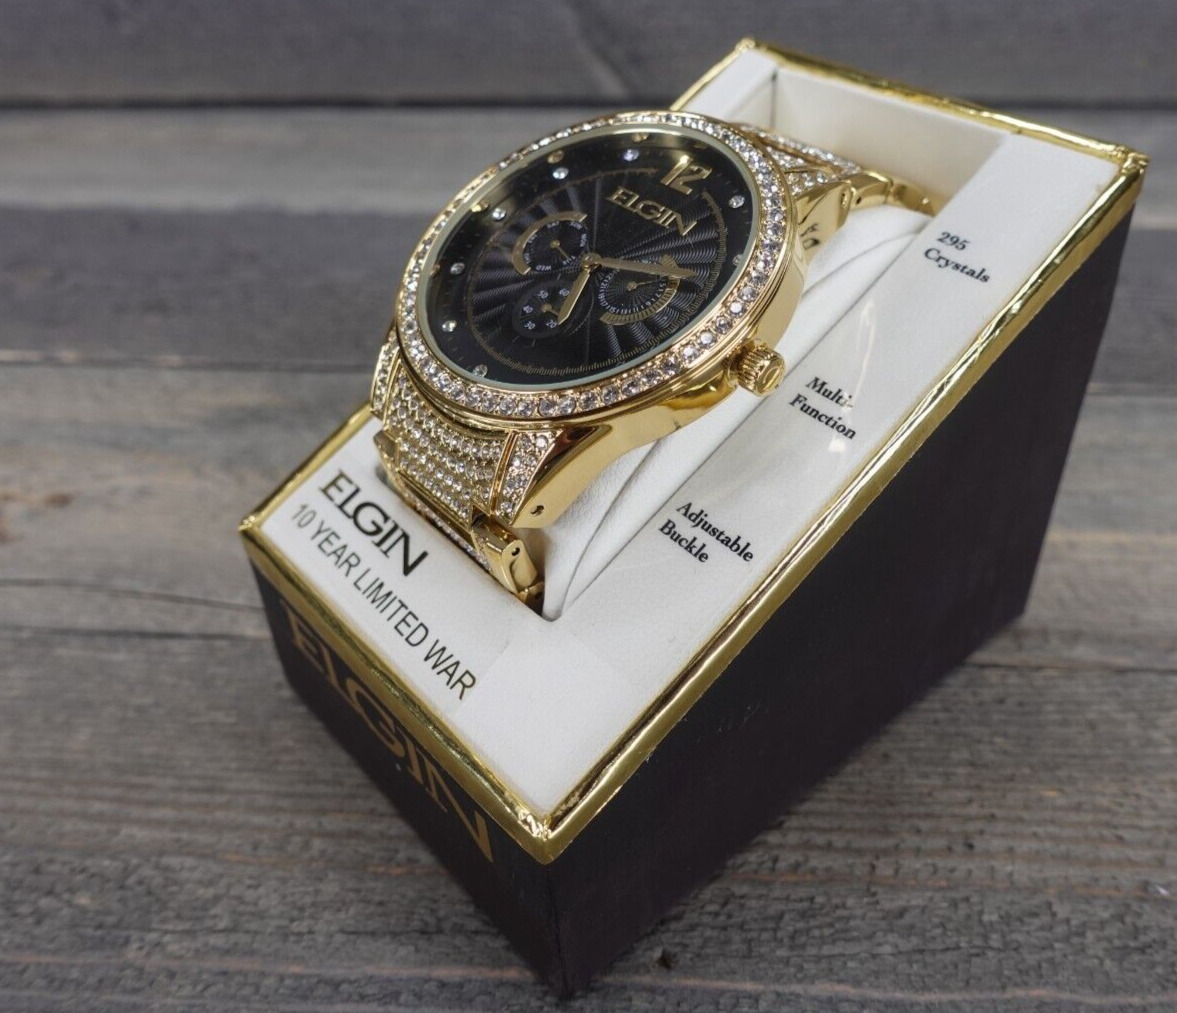 Elgin Men's Gold-Tone - 295 Crystals - Black Dial Watch - FG160030G - NEW